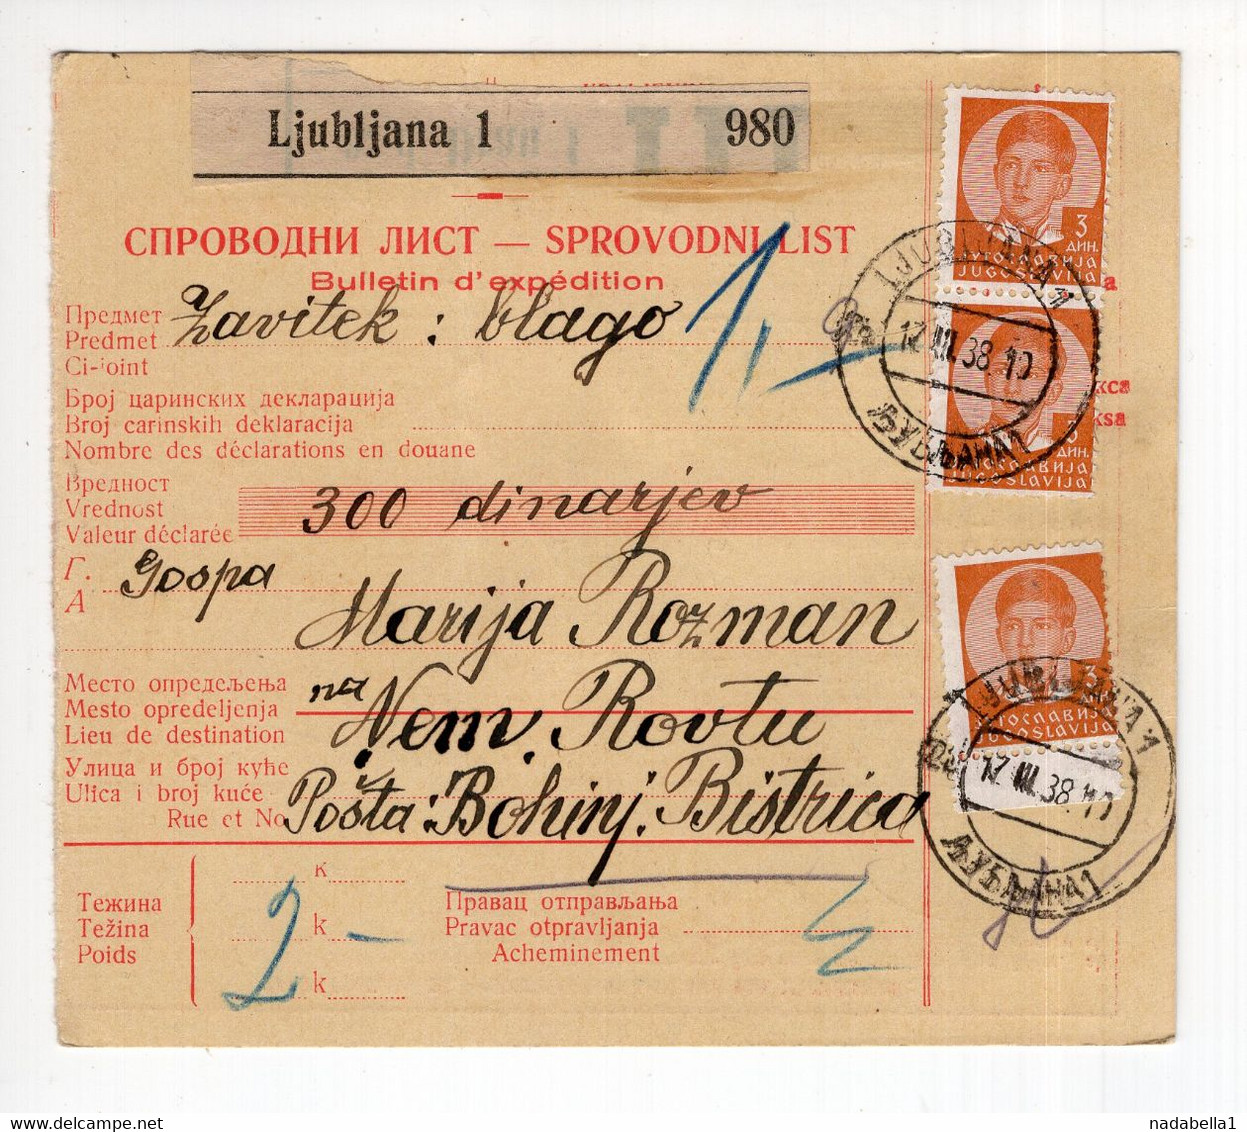 1938. KINGDOM OF YUGOSLAVIA,SLOVENIA,LJUBLJANA,PARCEL CARD,POSTAGE DUE AT BOHINJSKA BISTRICA - Postage Due